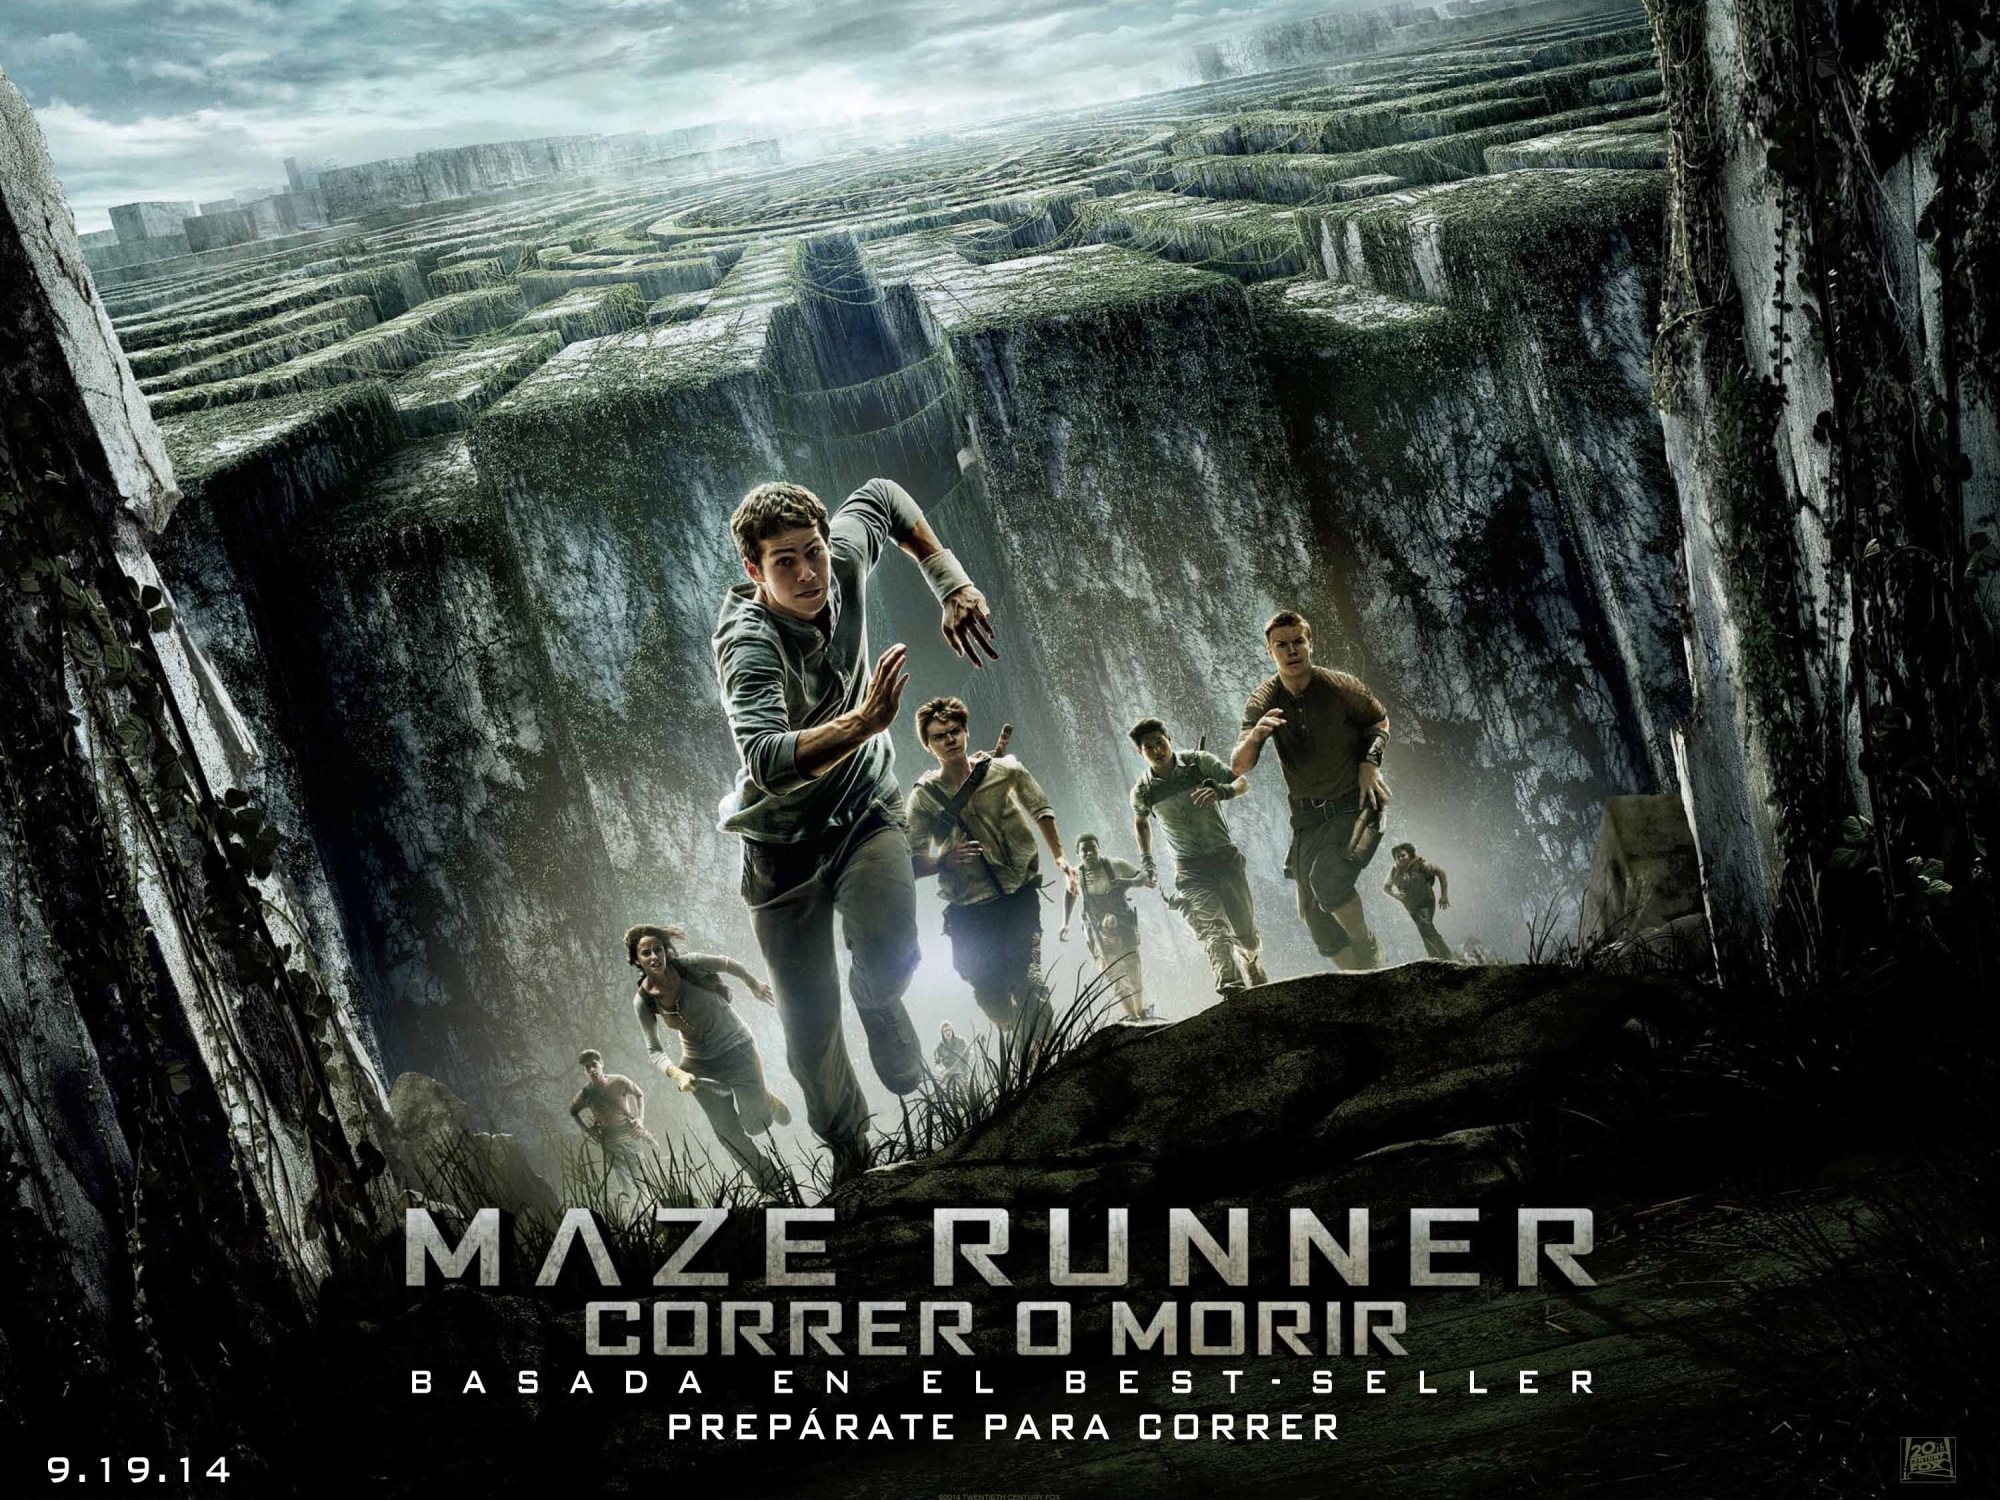 Maze Runner: Correr ou Morrer